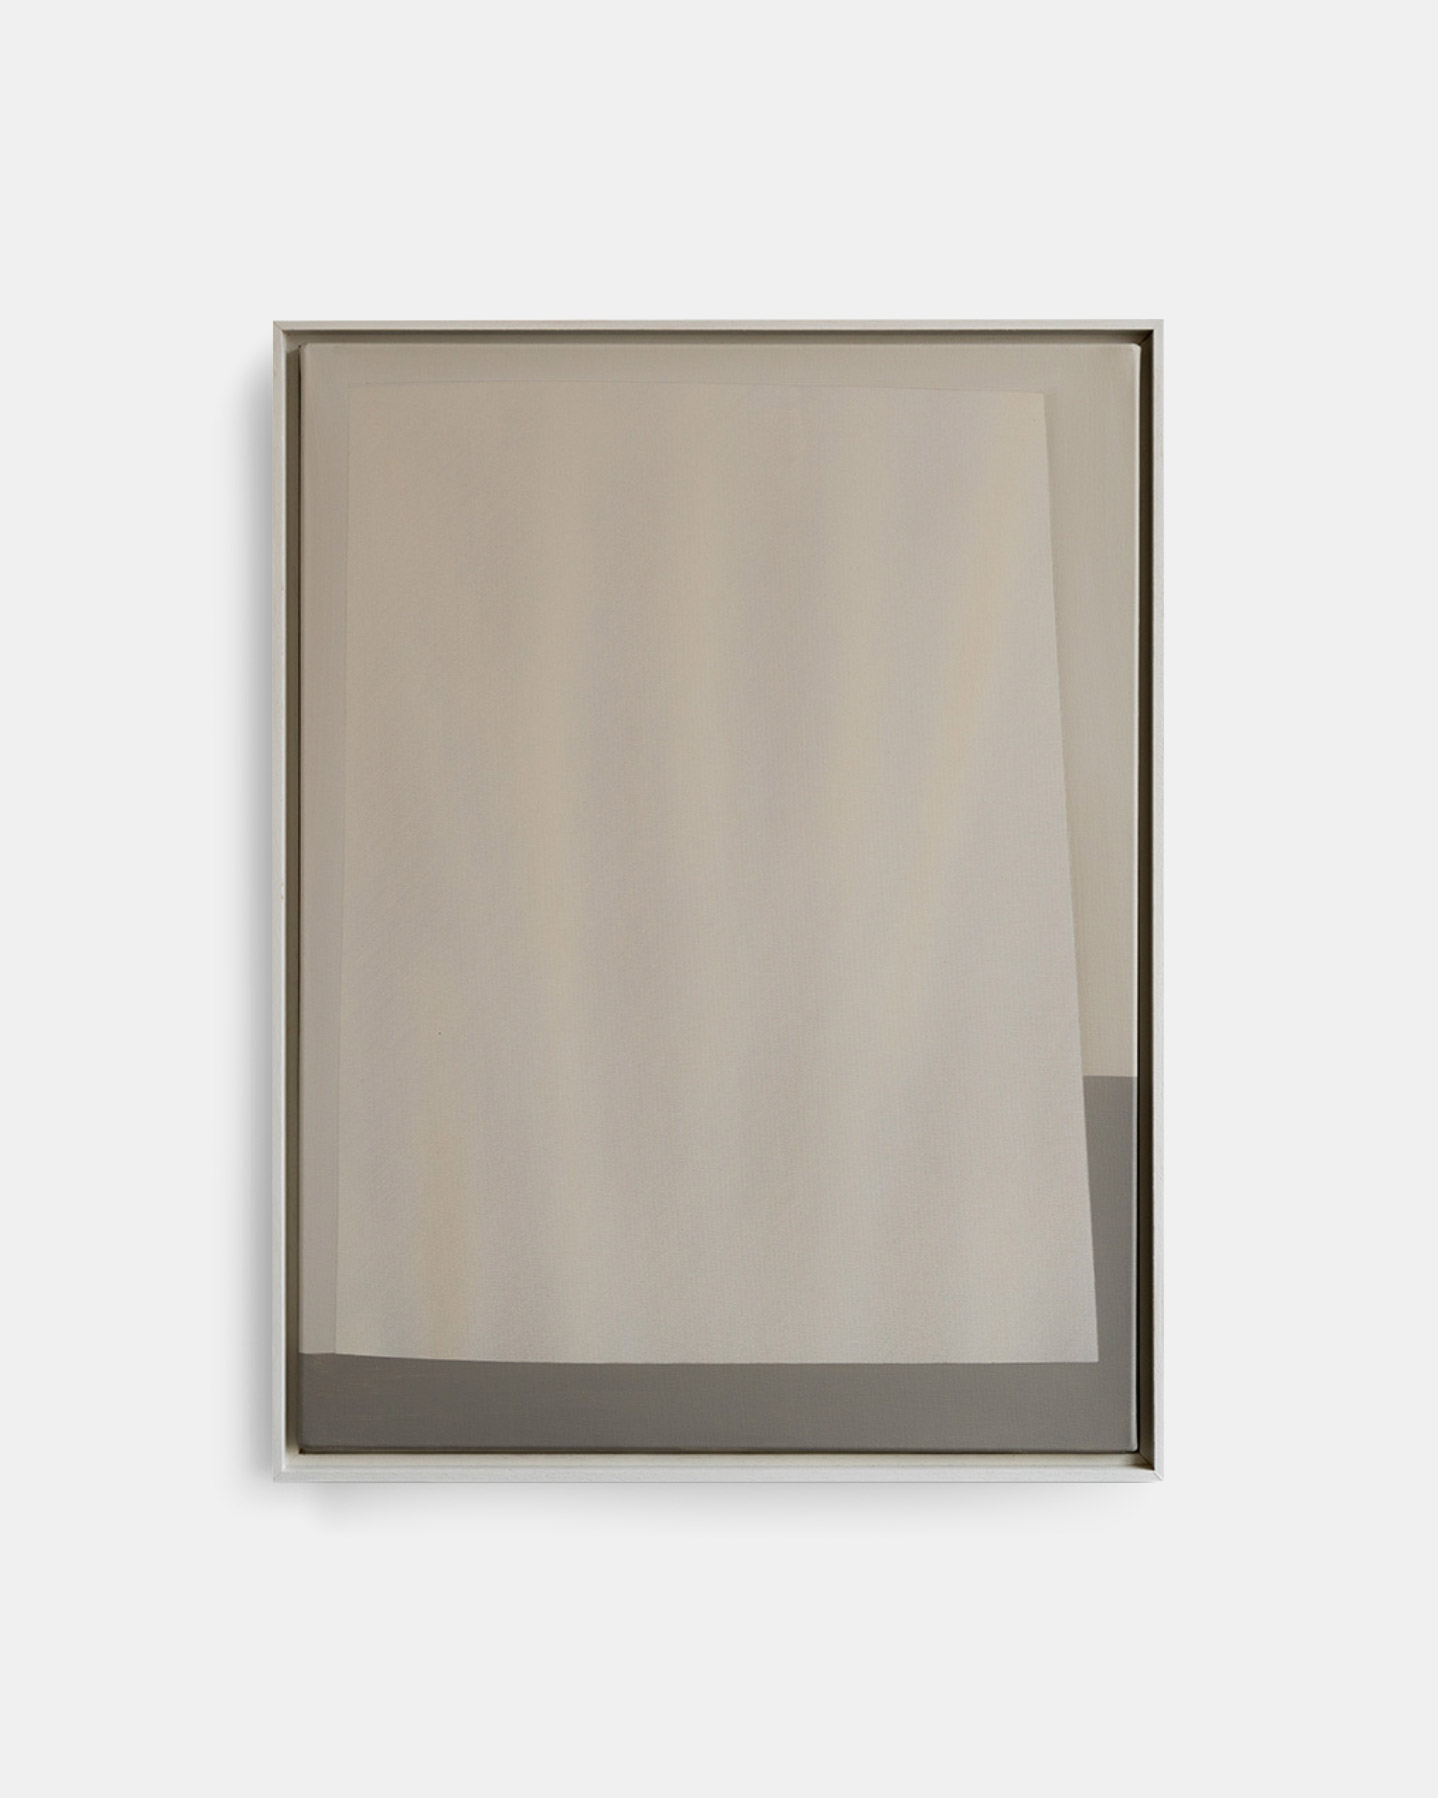 Tycjan Knut, Untitled 14, 2020, Acrylic on canvas, 83.8 × 62.2 cm © The Artist, Image via Tappan